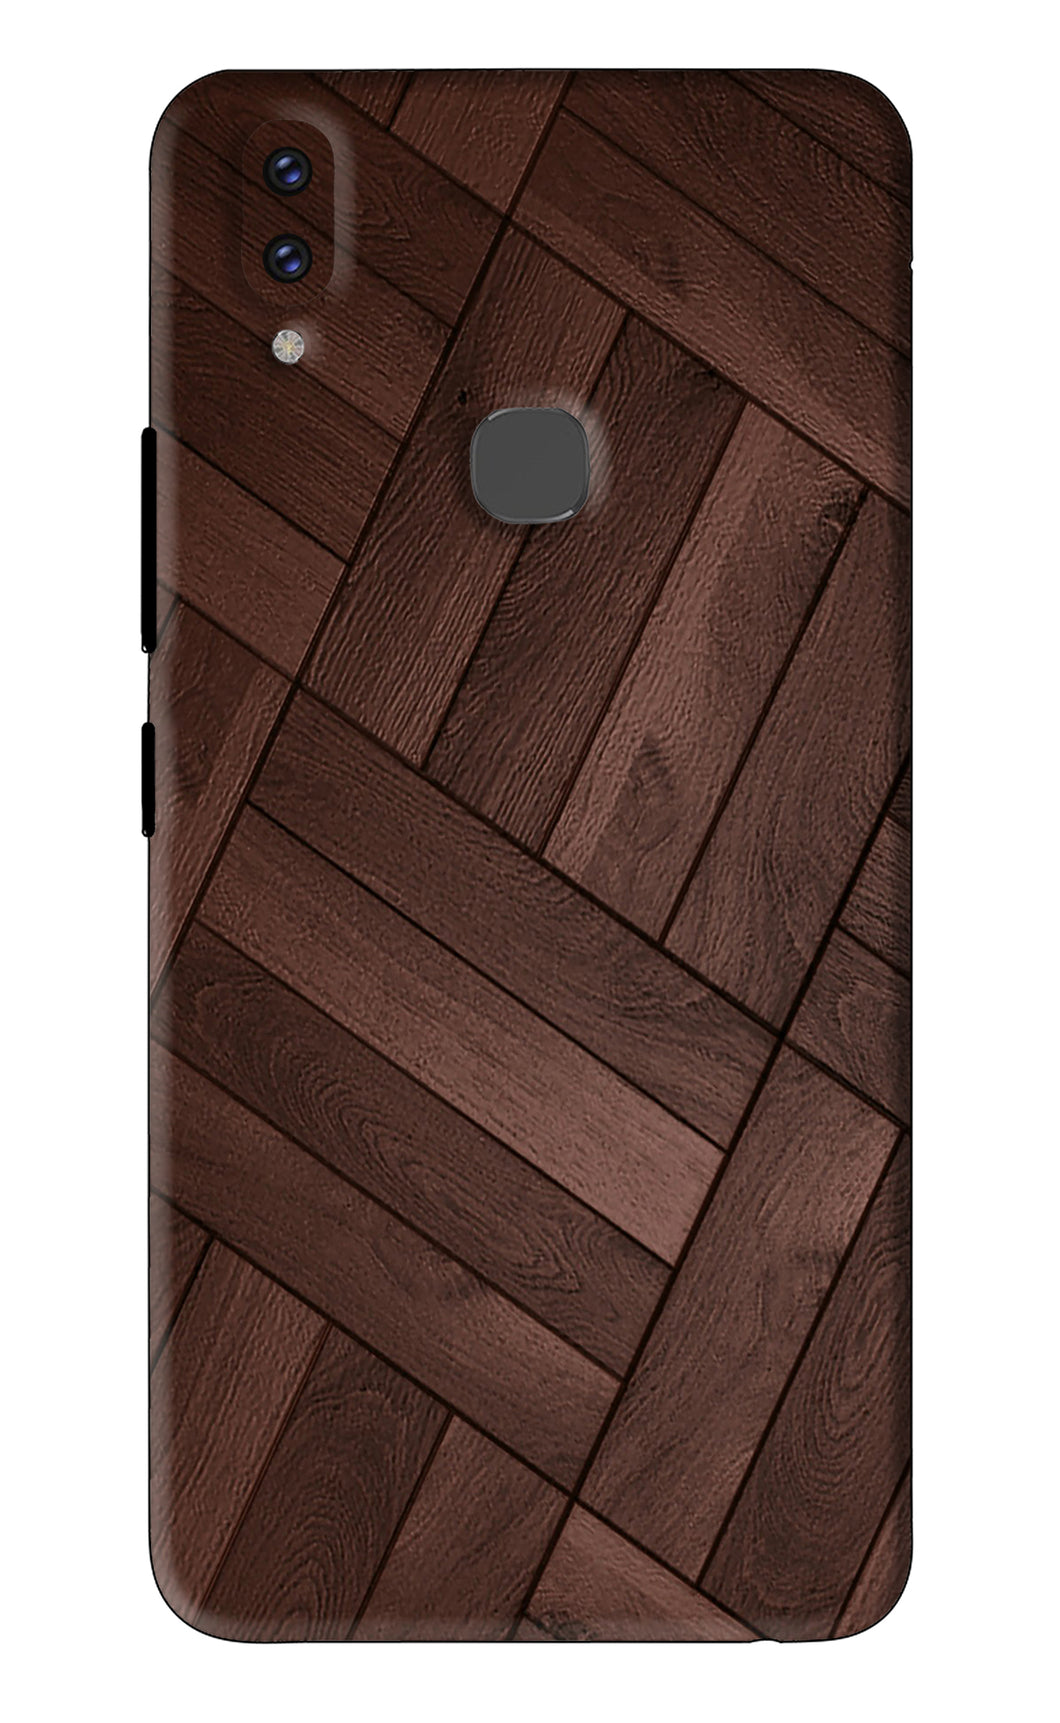 Wooden Texture Design Vivo V9 Back Skin Wrap